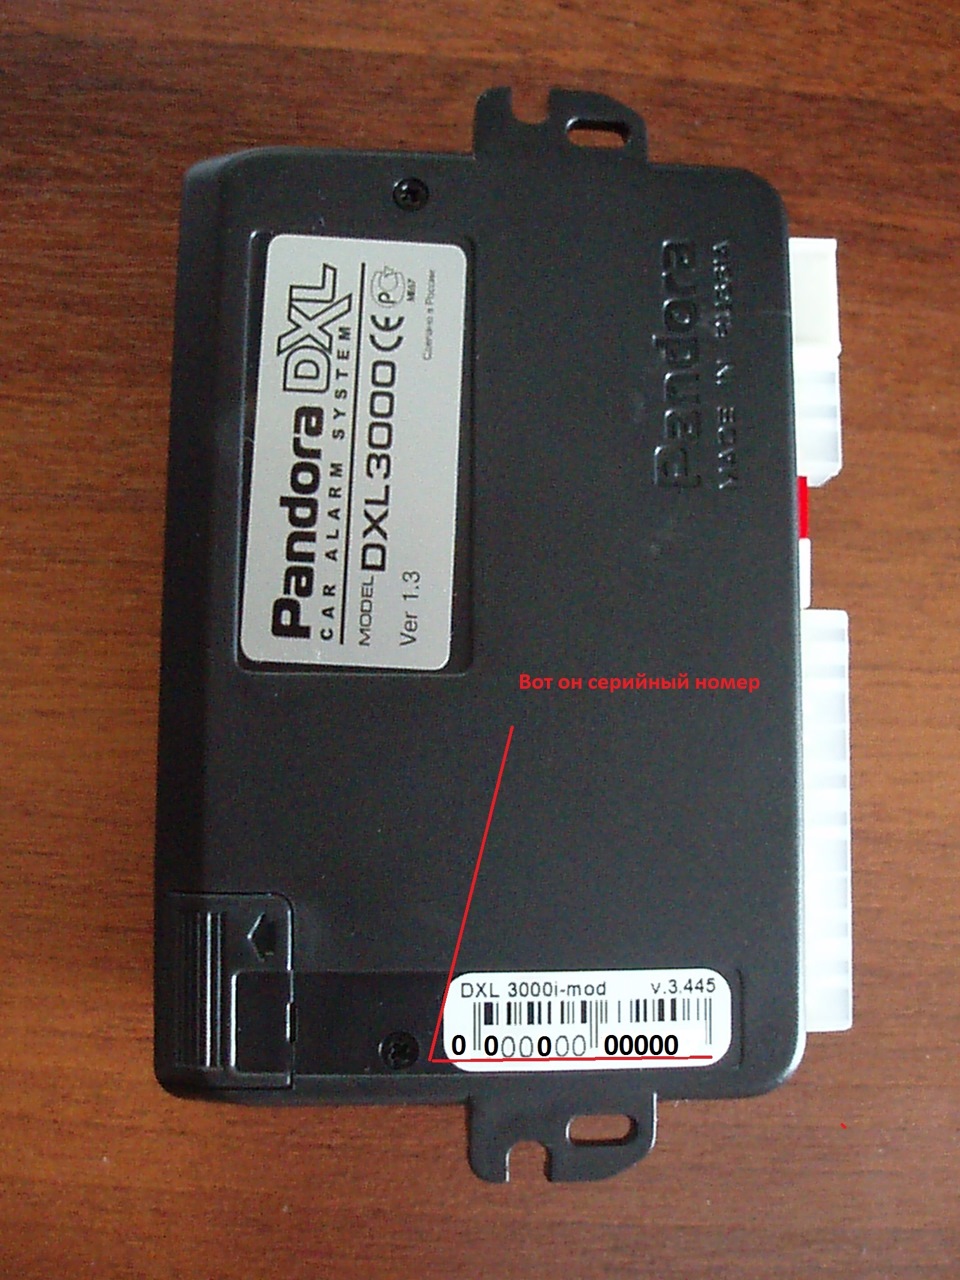 Pandora dxl 3000. Пандора DXL 3000. Pandora DXL 3000i Mod. Блок Пандора 3000. Блок сигнализации DXL 3000.